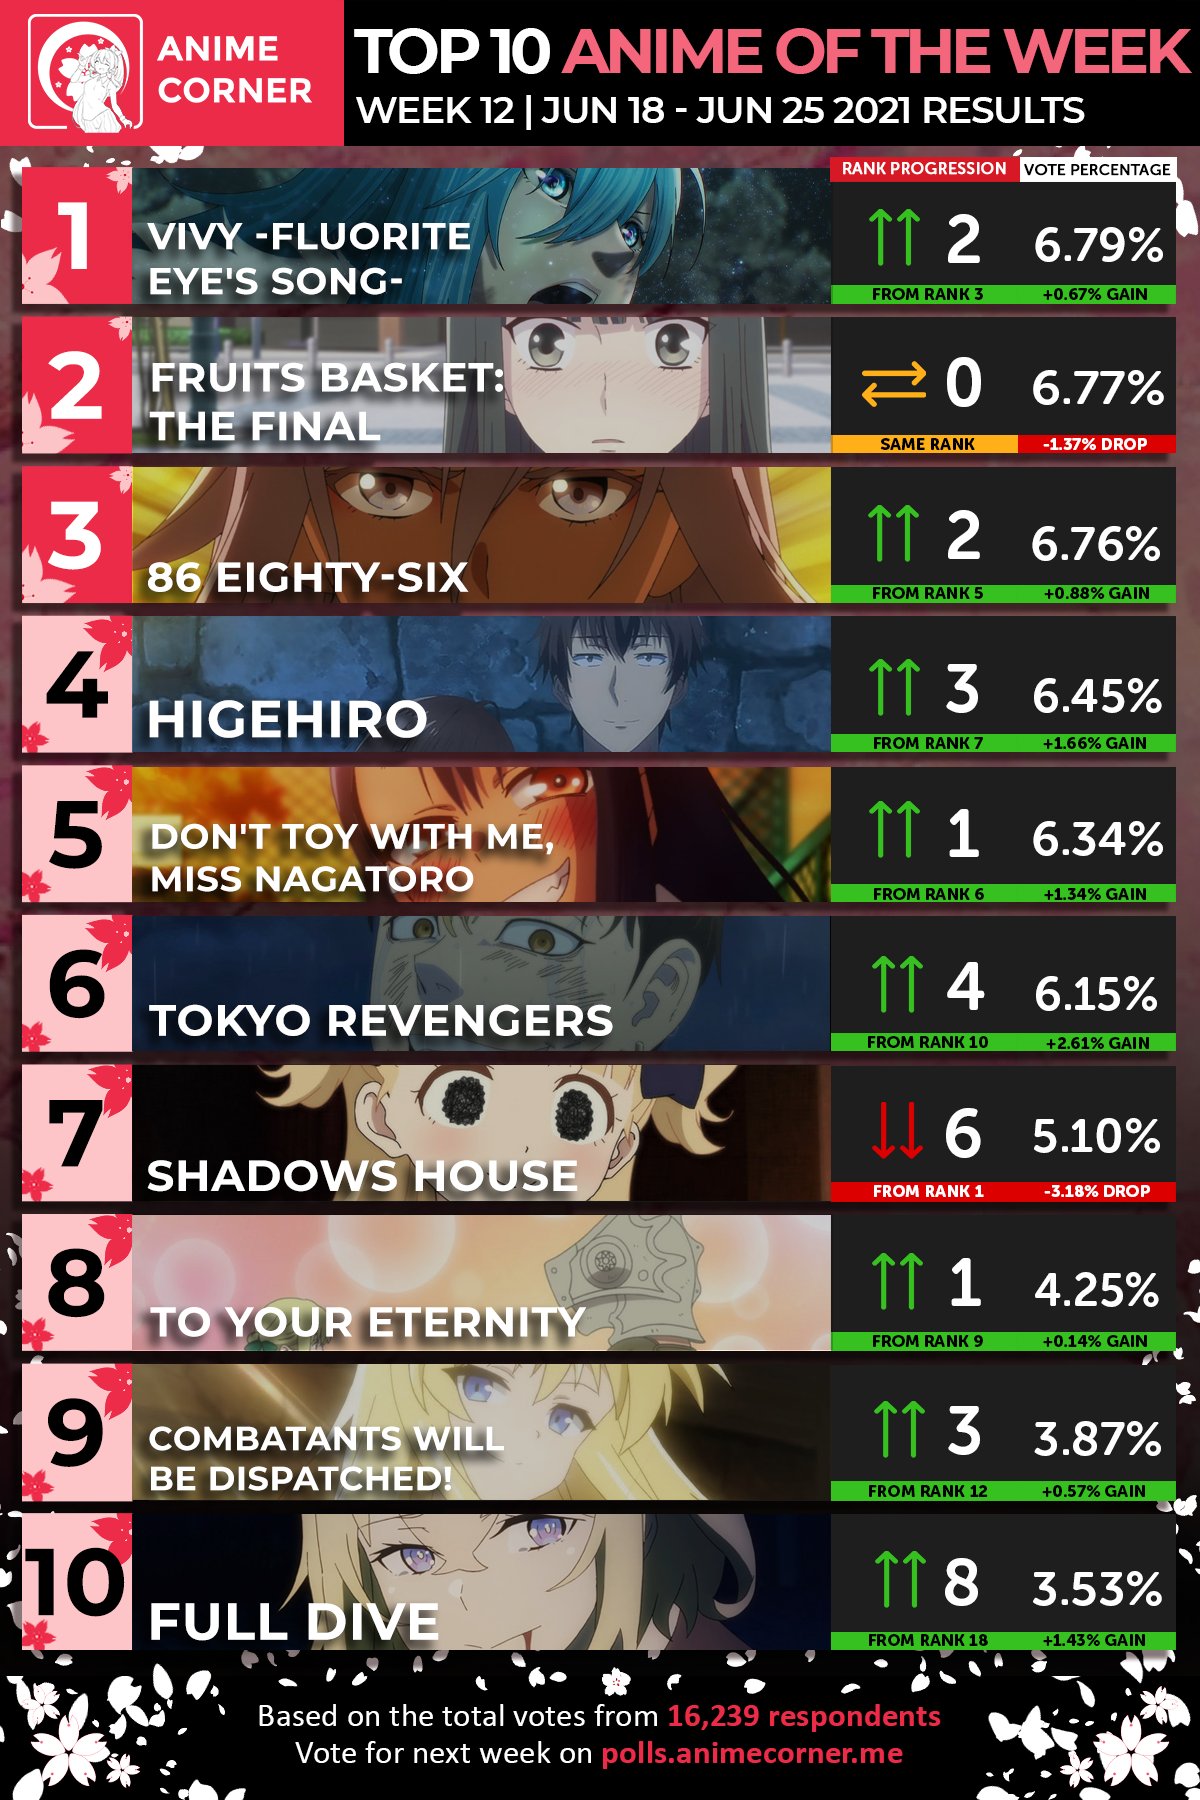 Top 10 Anime of the Week #1 - Fall 2021 (Anime Corner) : r/anime